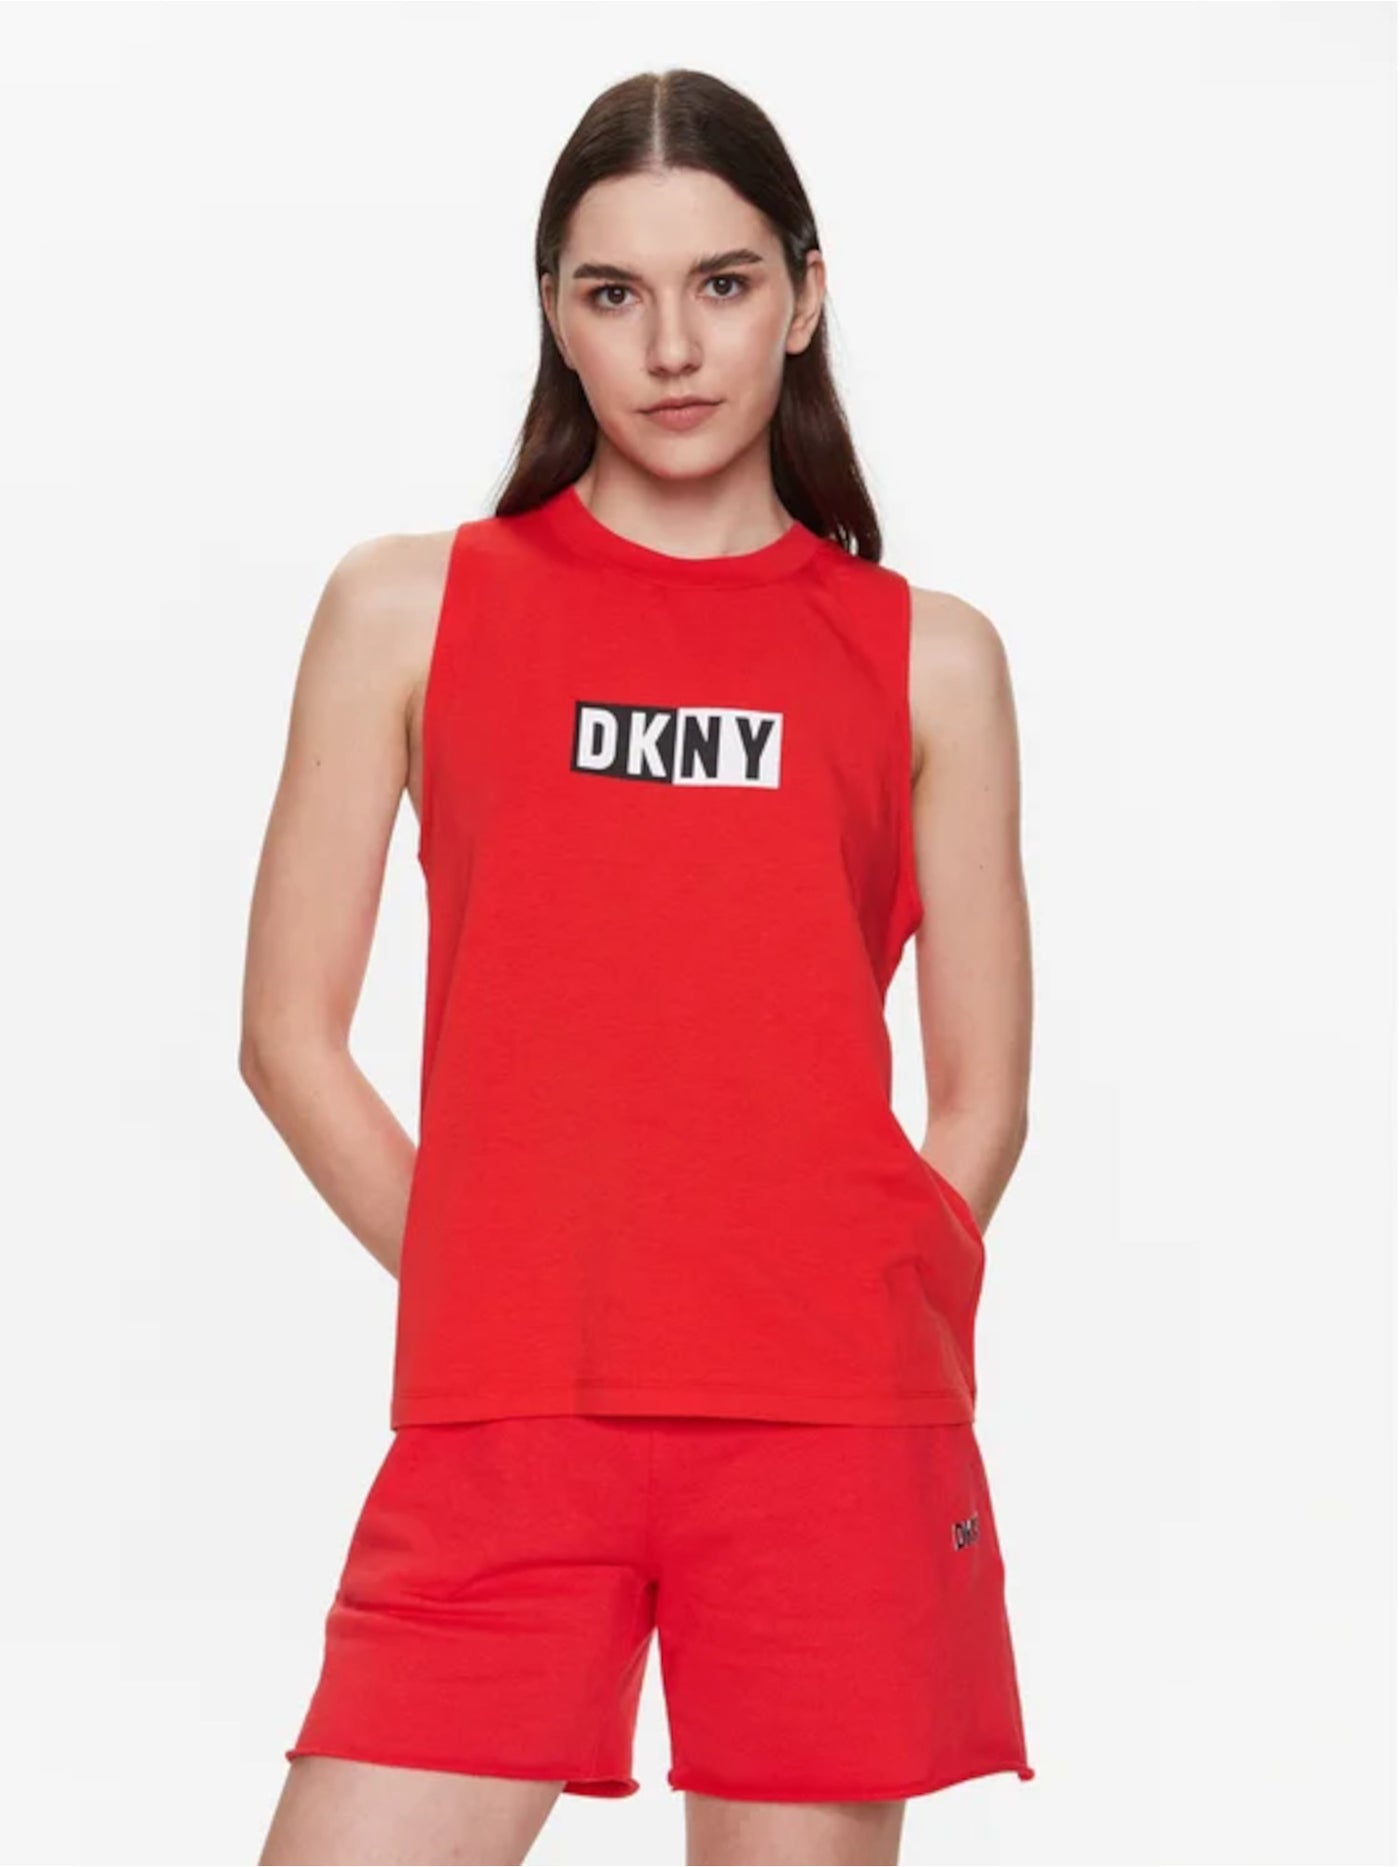 DKNY Womens Red Logo Graphic Sleeveless Crew Neck Tank Top S